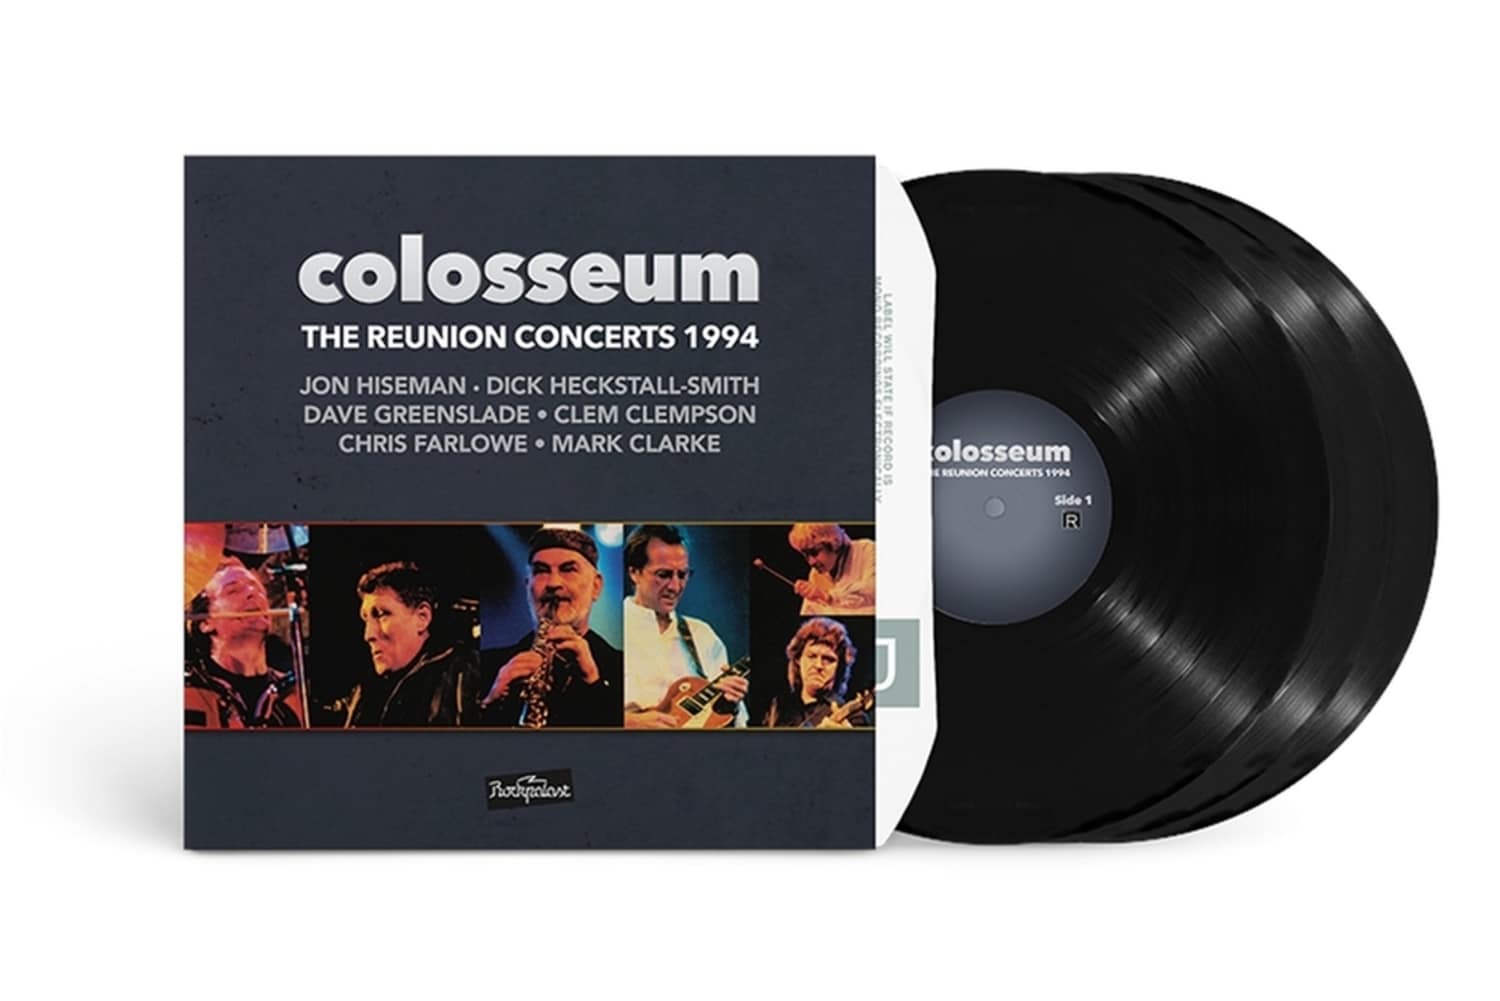 Colosseum - THE REUNION CONCERTS 1994 